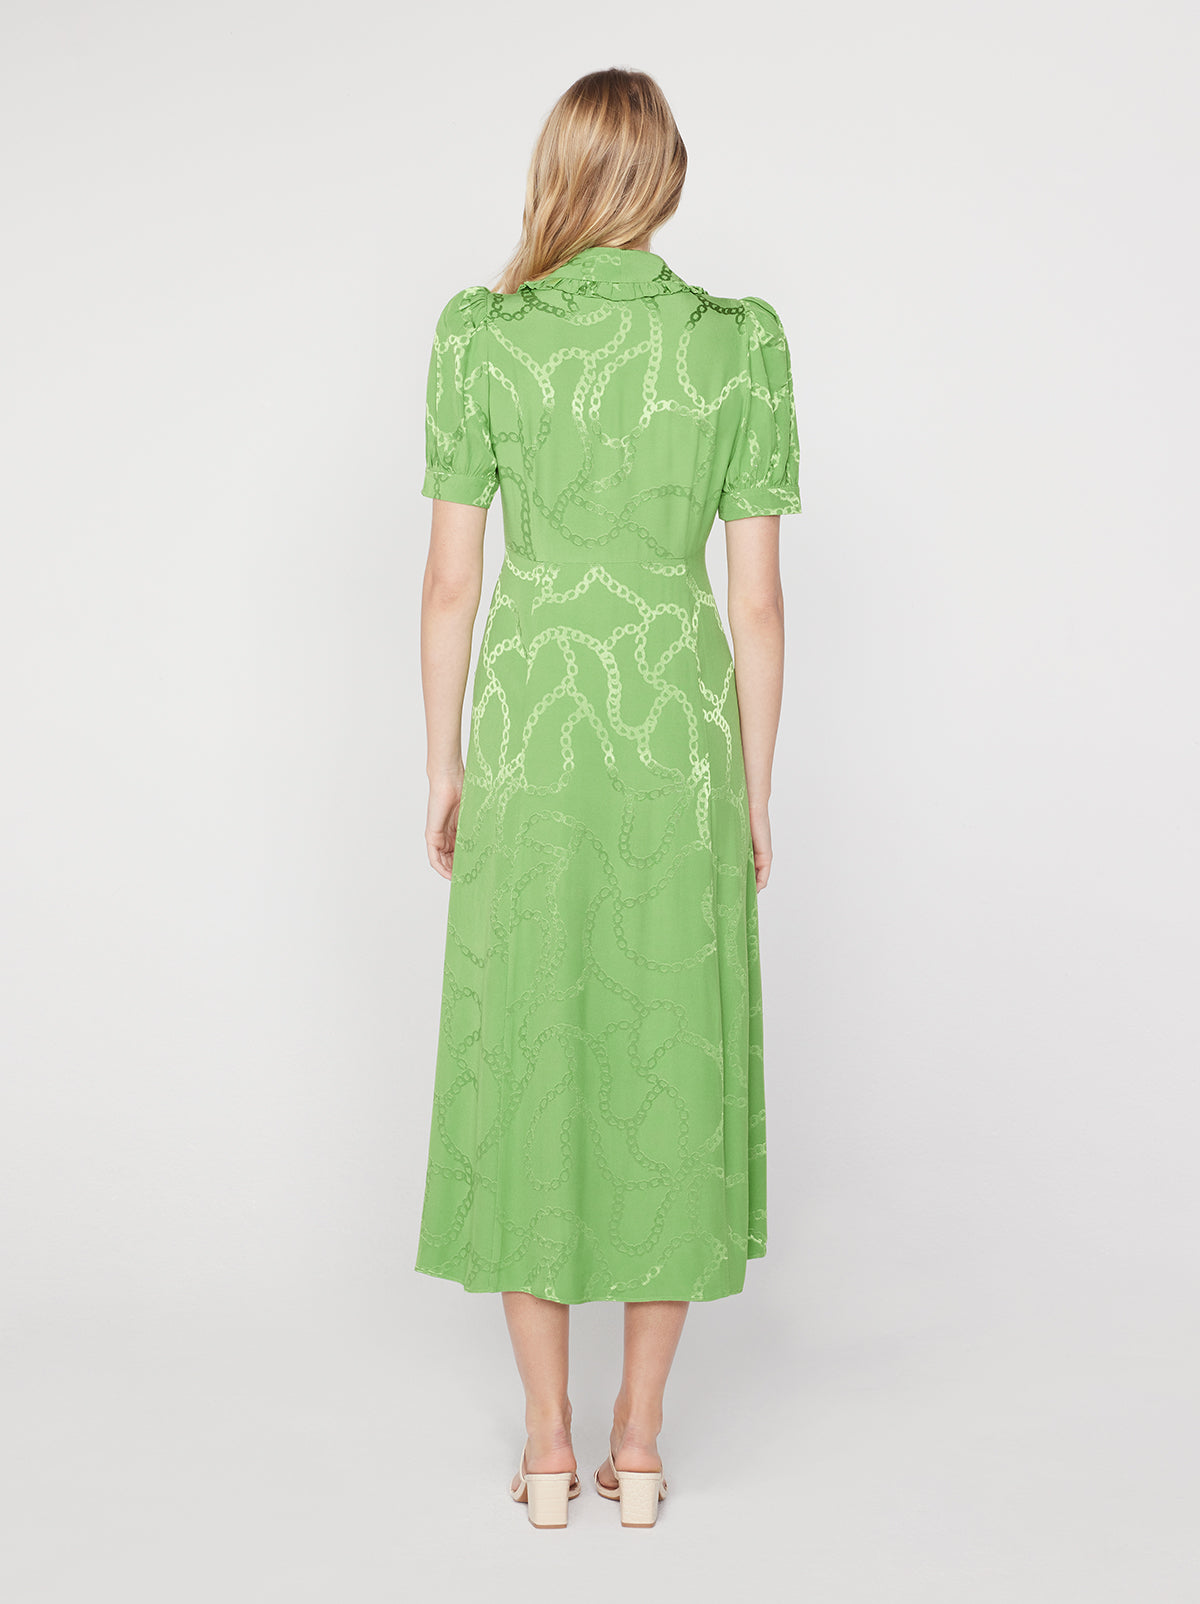 Bethany Green Chain Jacquard Tea Dress